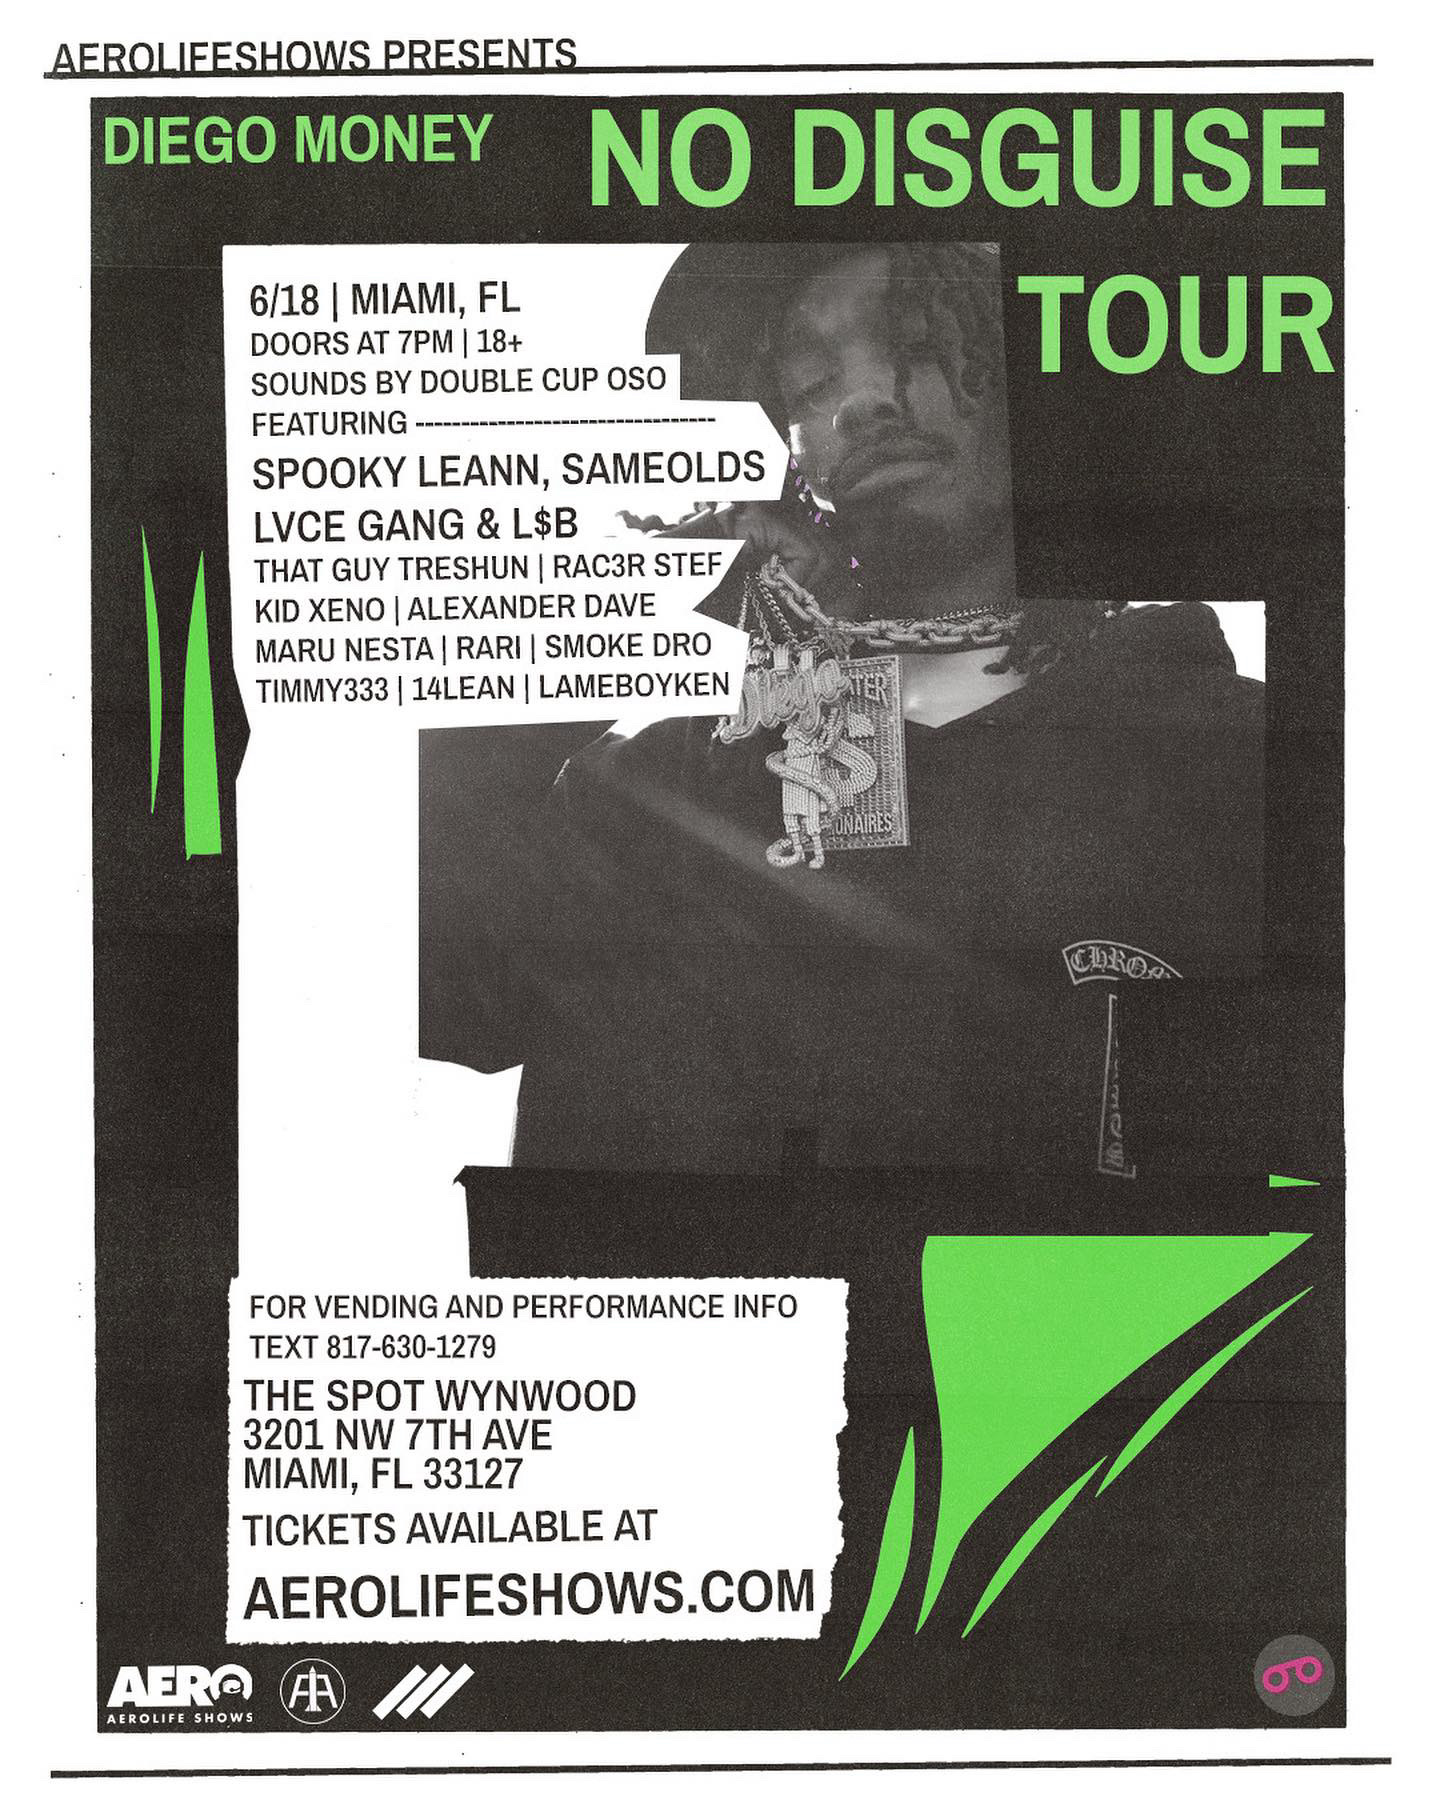 Lvce Gang Live in Miami, FL June 18th